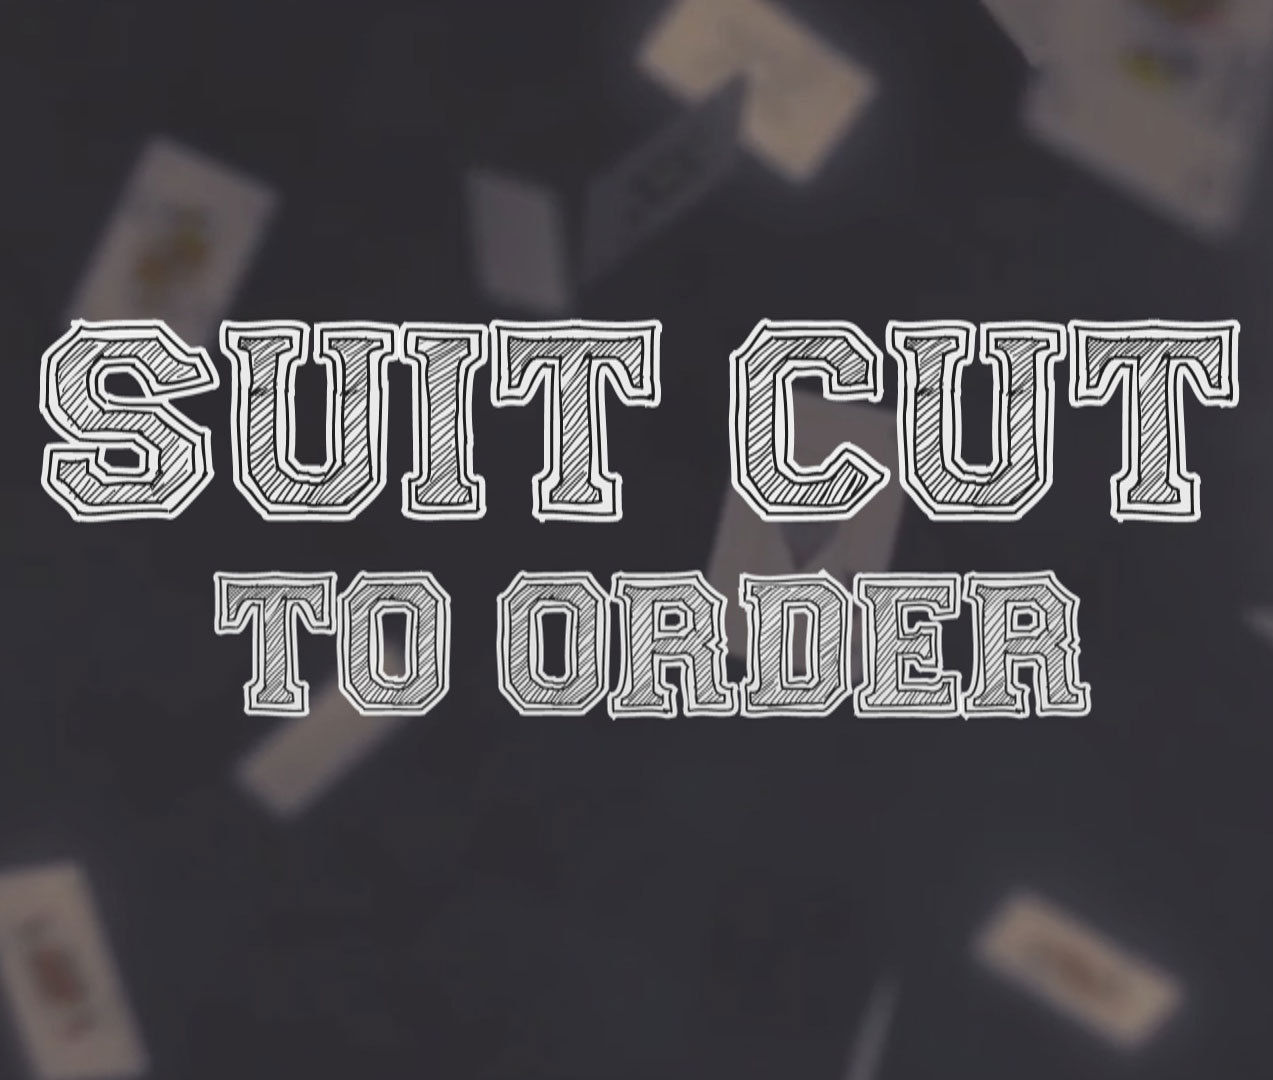 Erik Tait - Suit Cut to Order